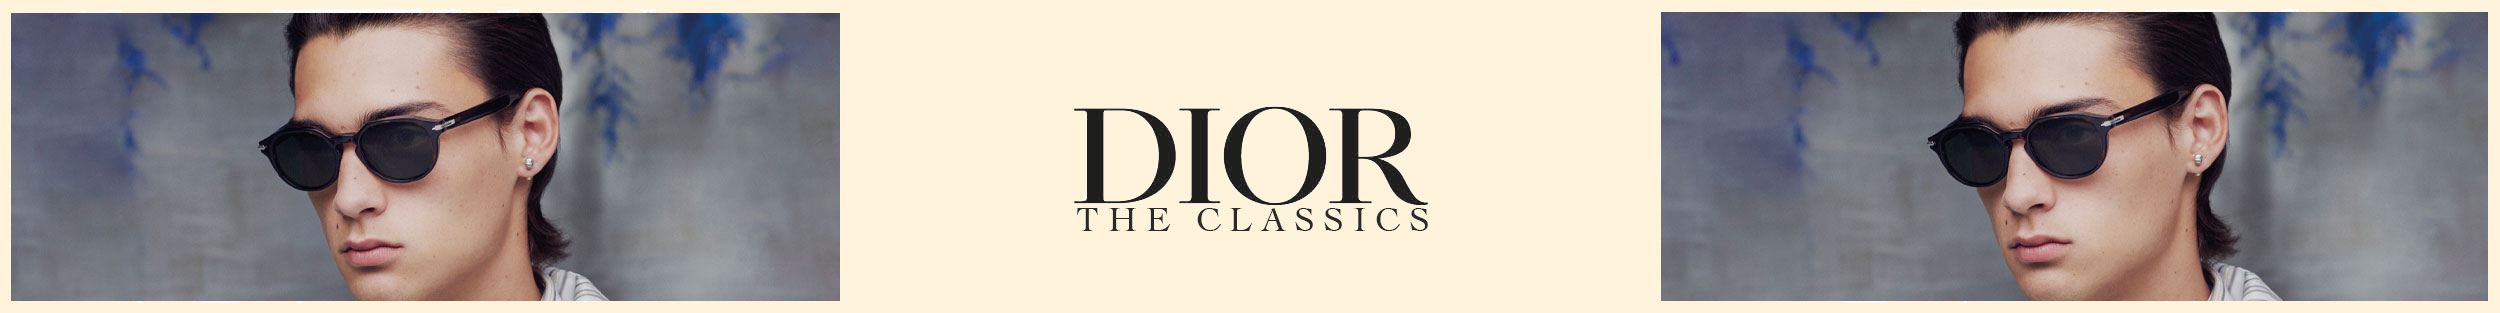 Dior - The Classics